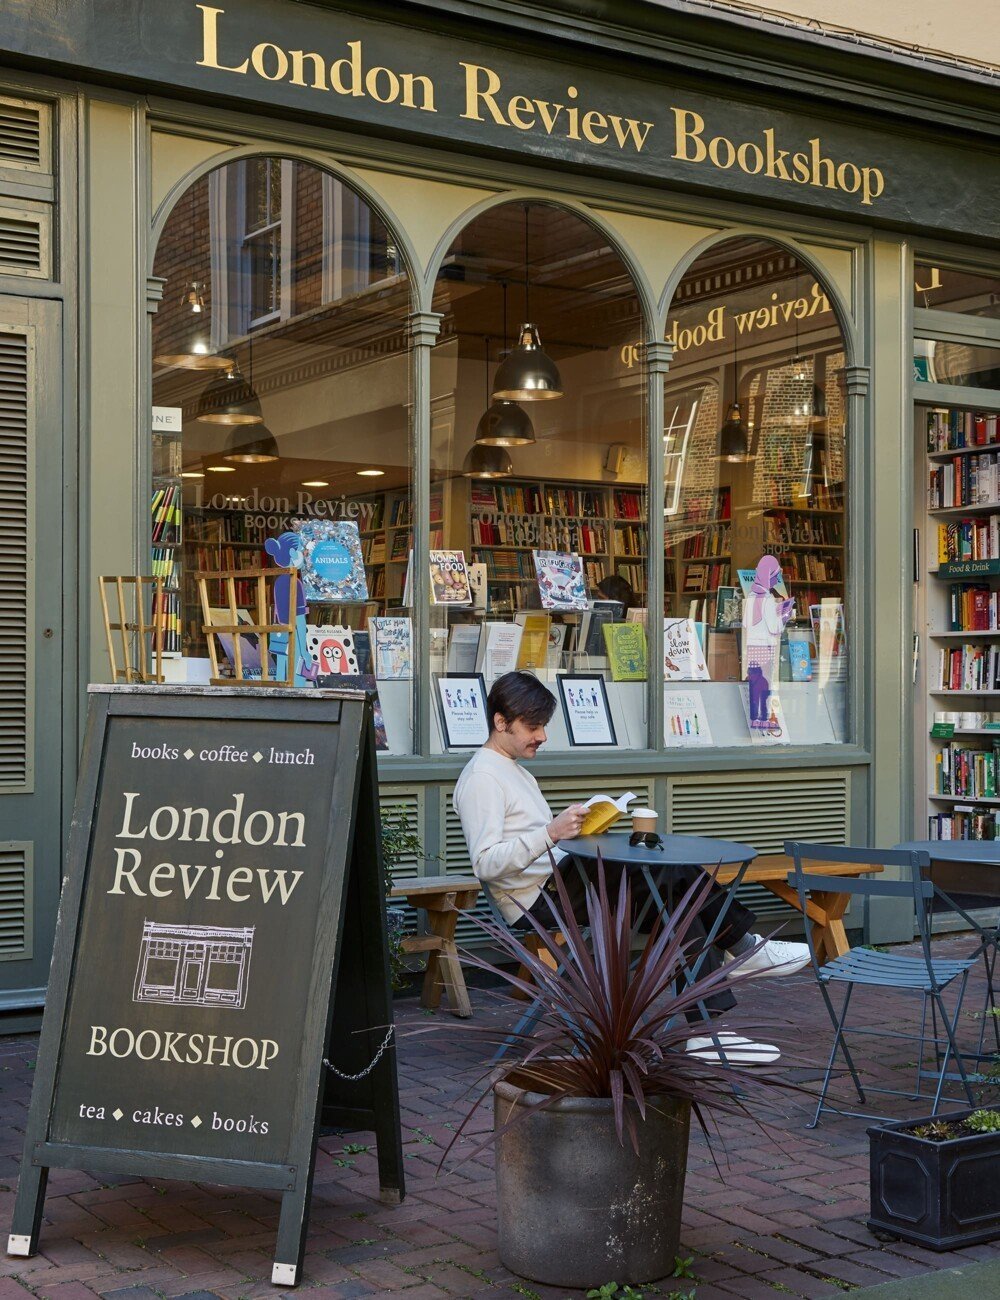 5. London Review Bookshop